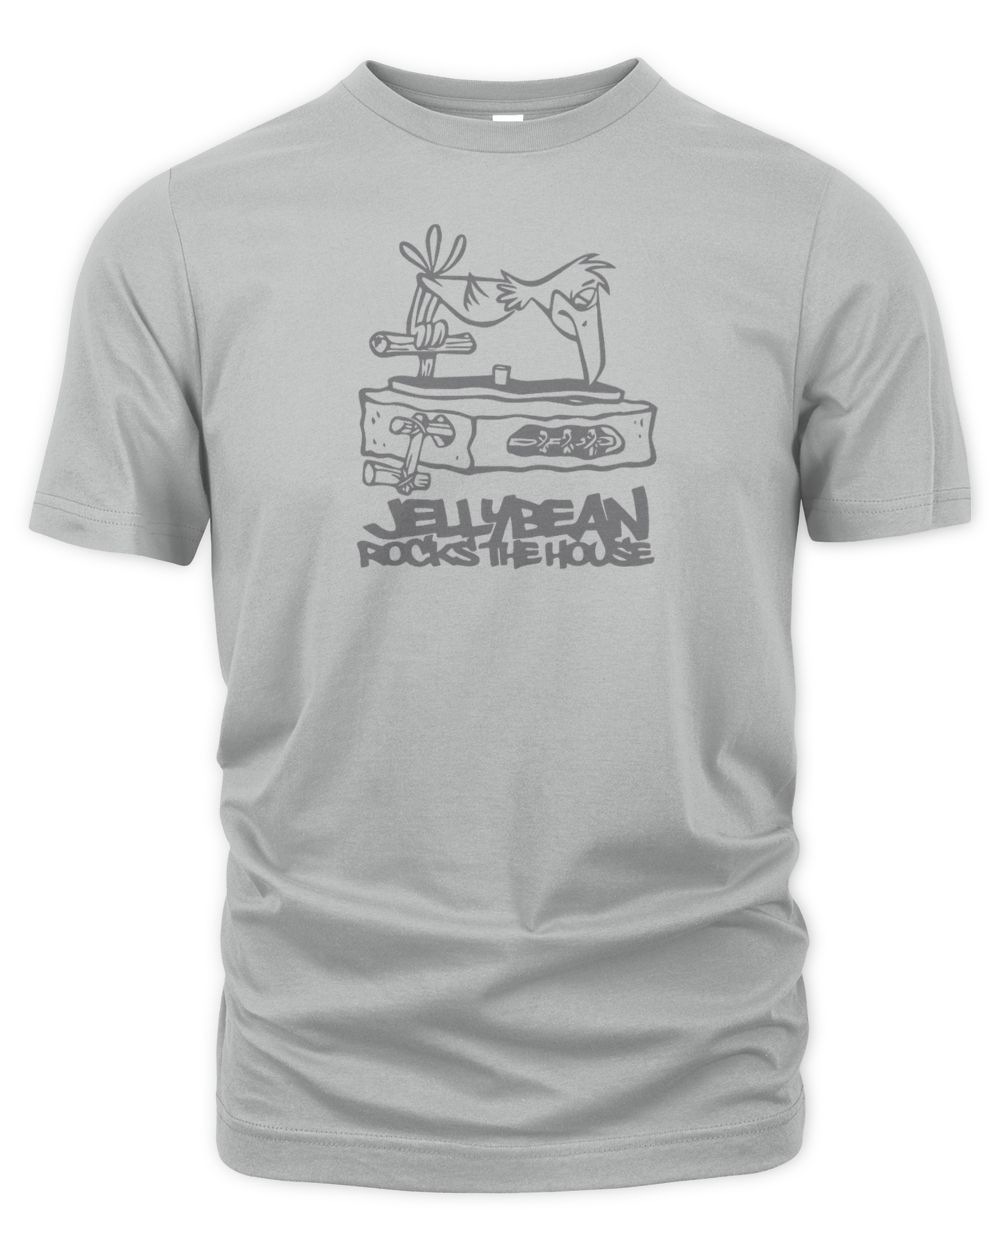 Jellybean Merch Rocks the House Shirt Unisex Premium T-Shirt silver 